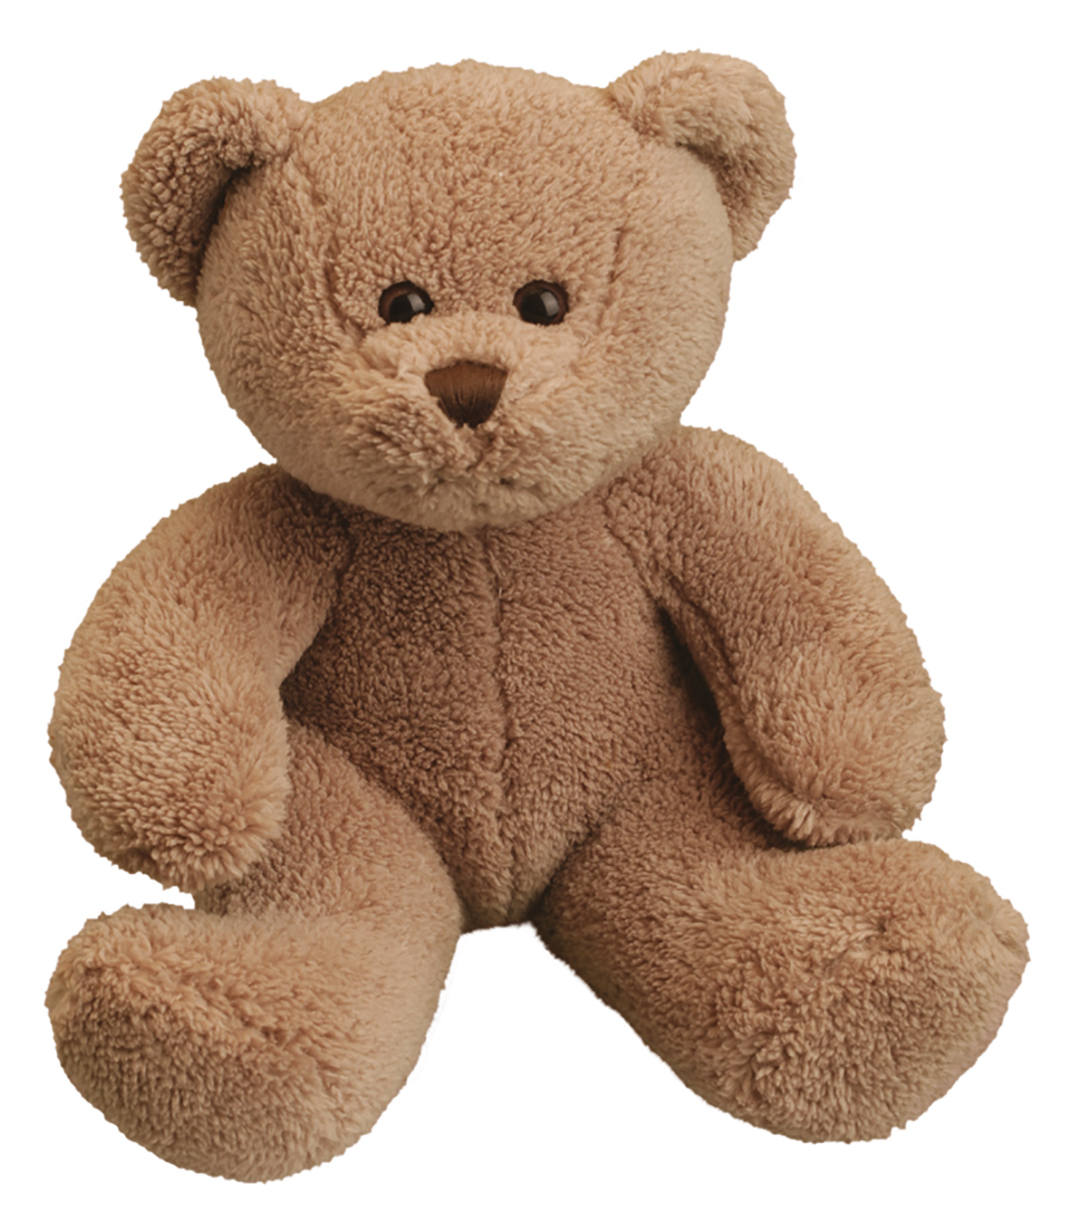 softplush teddy bear